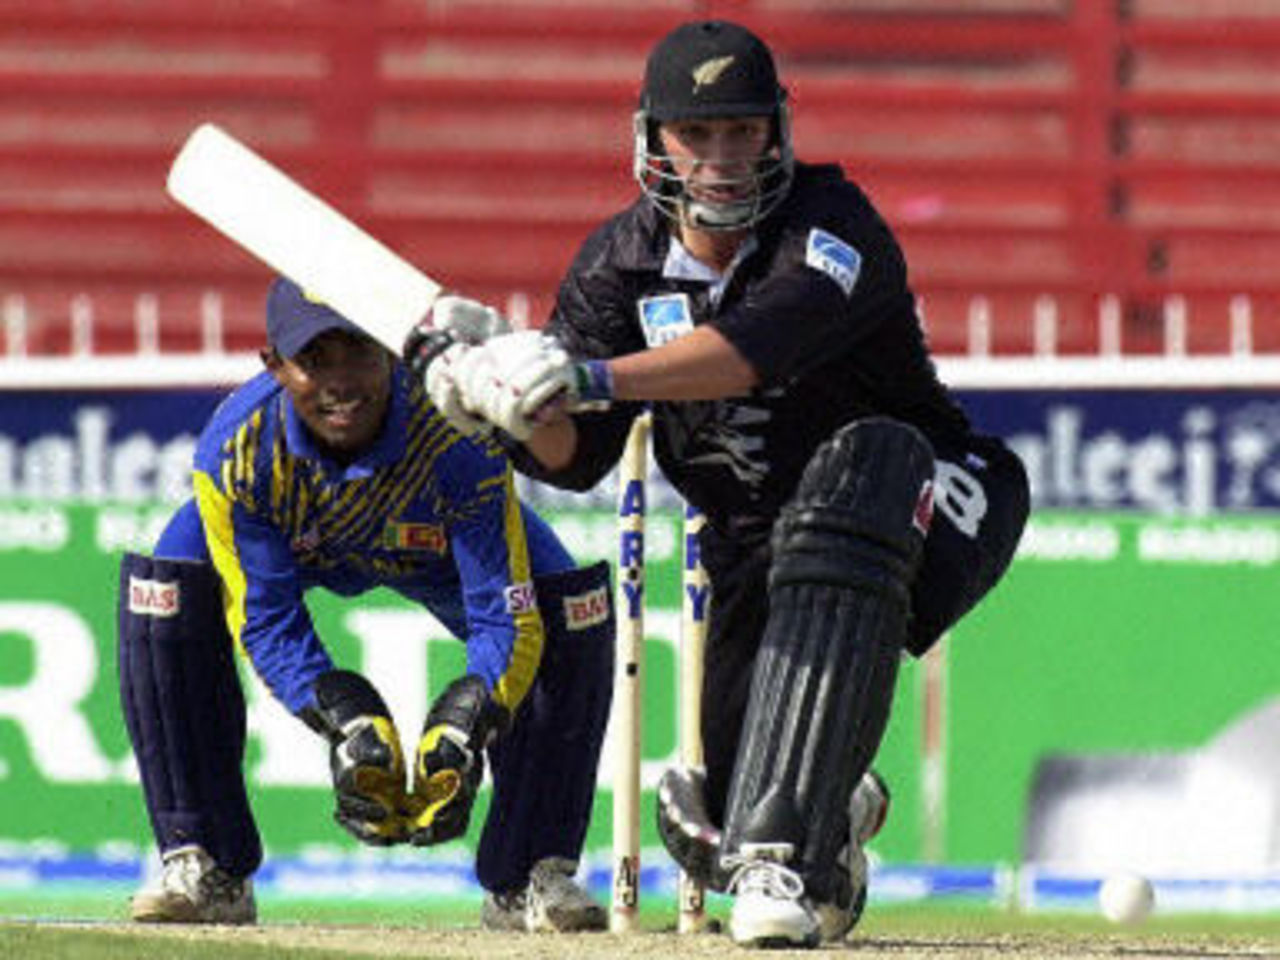 Mathew Sinclair sweeps for a boundary, ODI6 at Sharjah, New Zealand v Sri Lanka, 17 April 2001